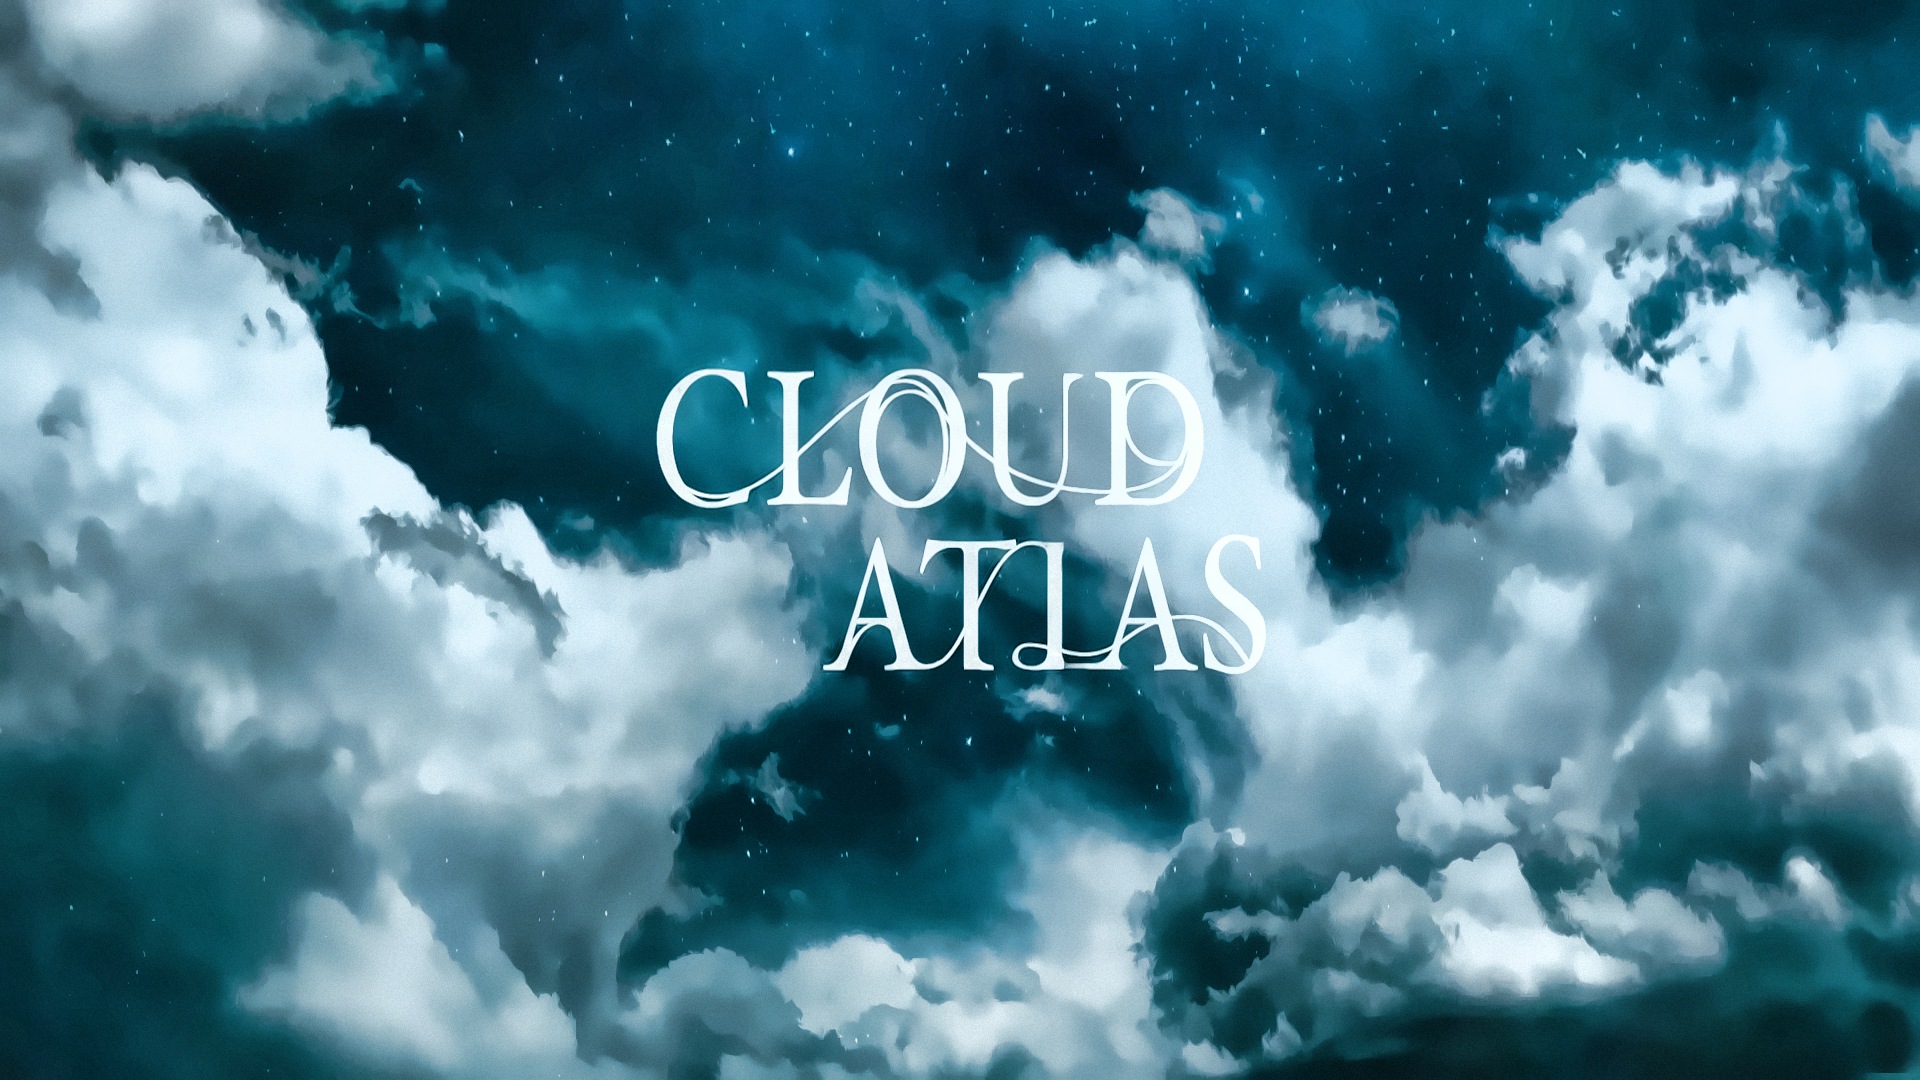 Cloud Atlas HD movie wallpapers #26 - 1920x1080